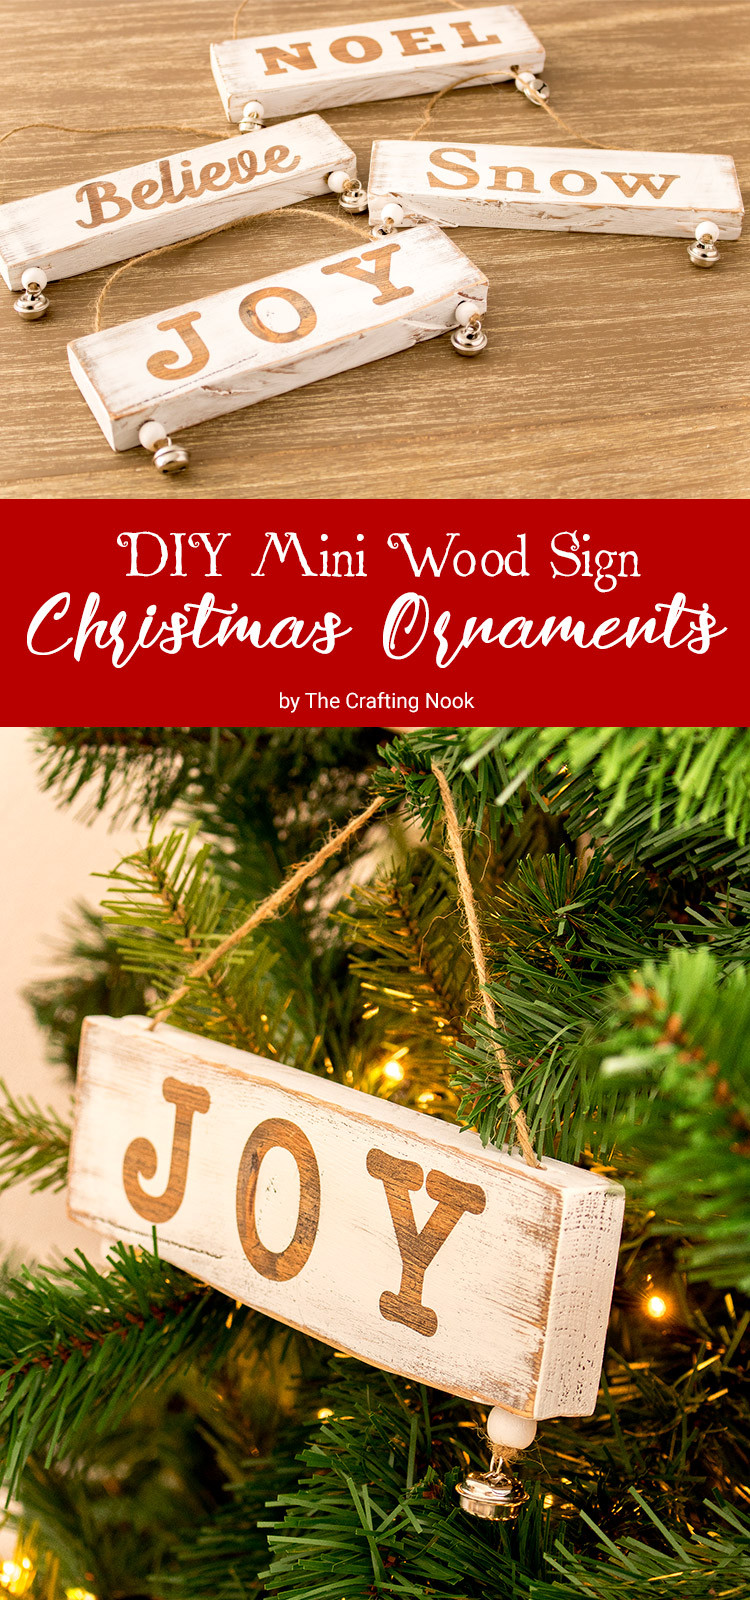 DIY Christmas Signs
 DIY Mini Wood Sign Christmas Ornaments